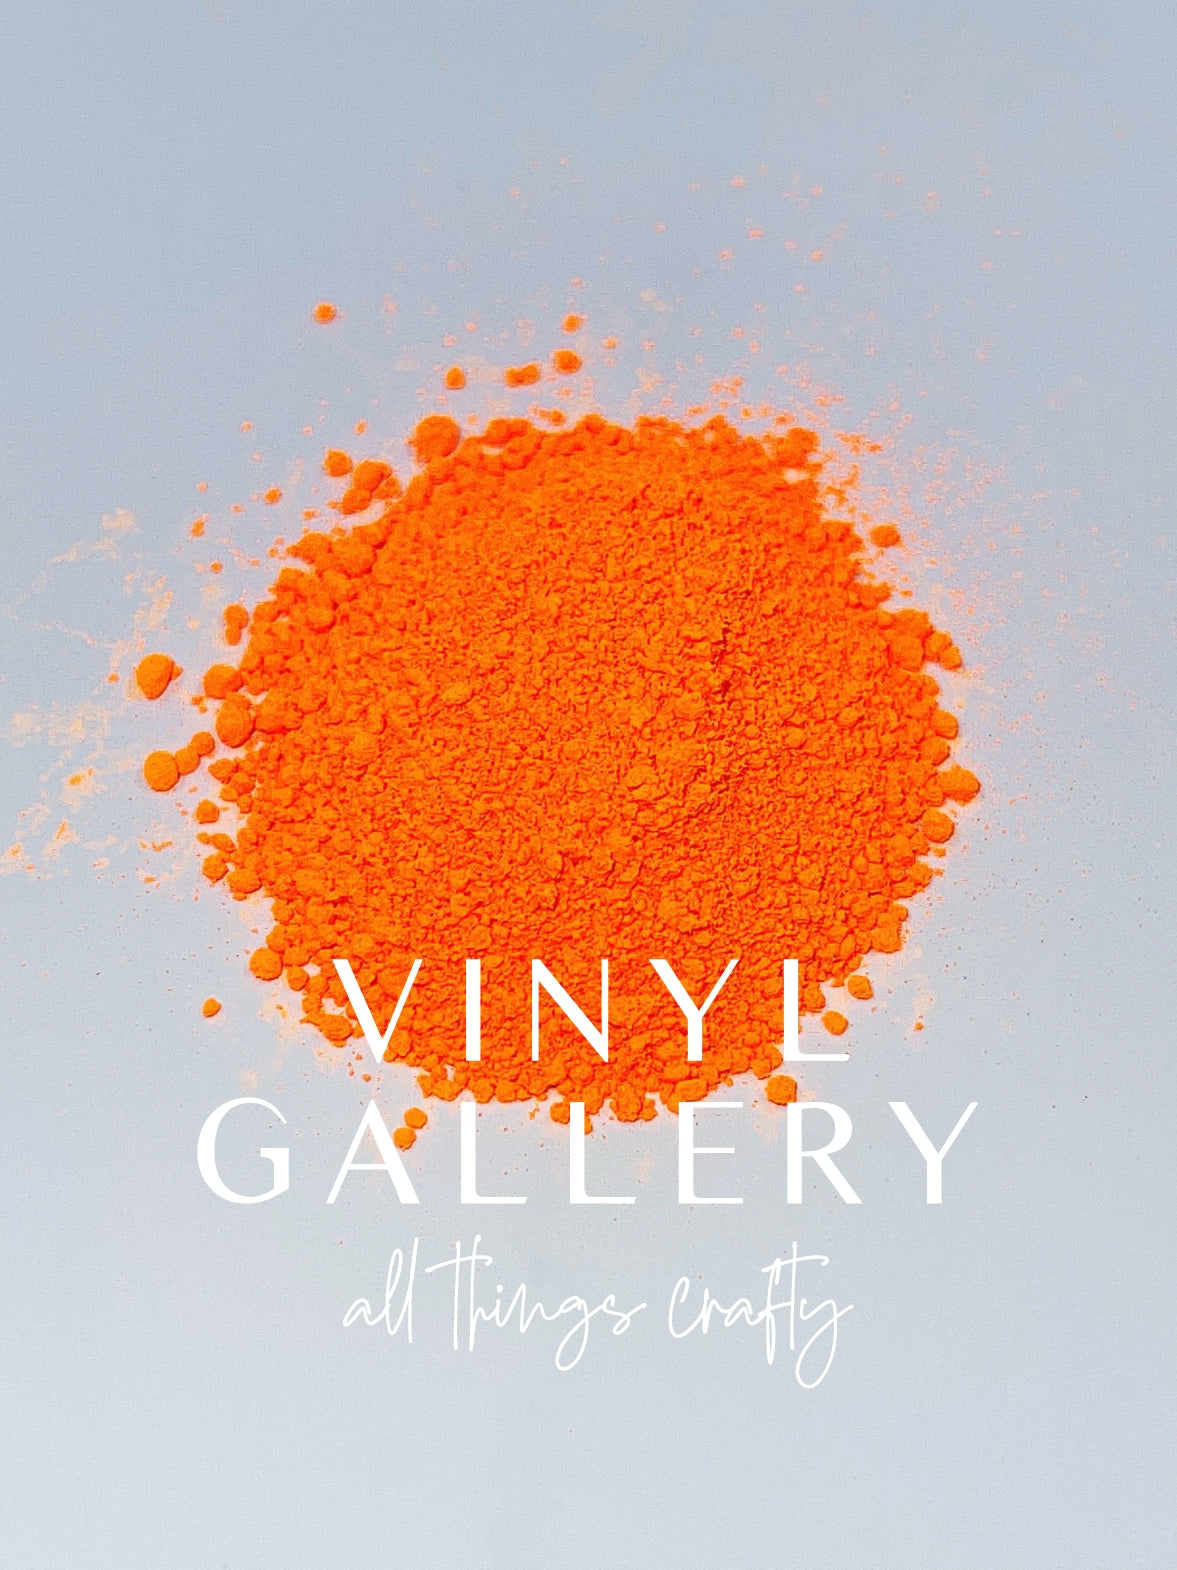 4K Glitter Co. Neon Mica Powders – Vinyl Gallery, LLC